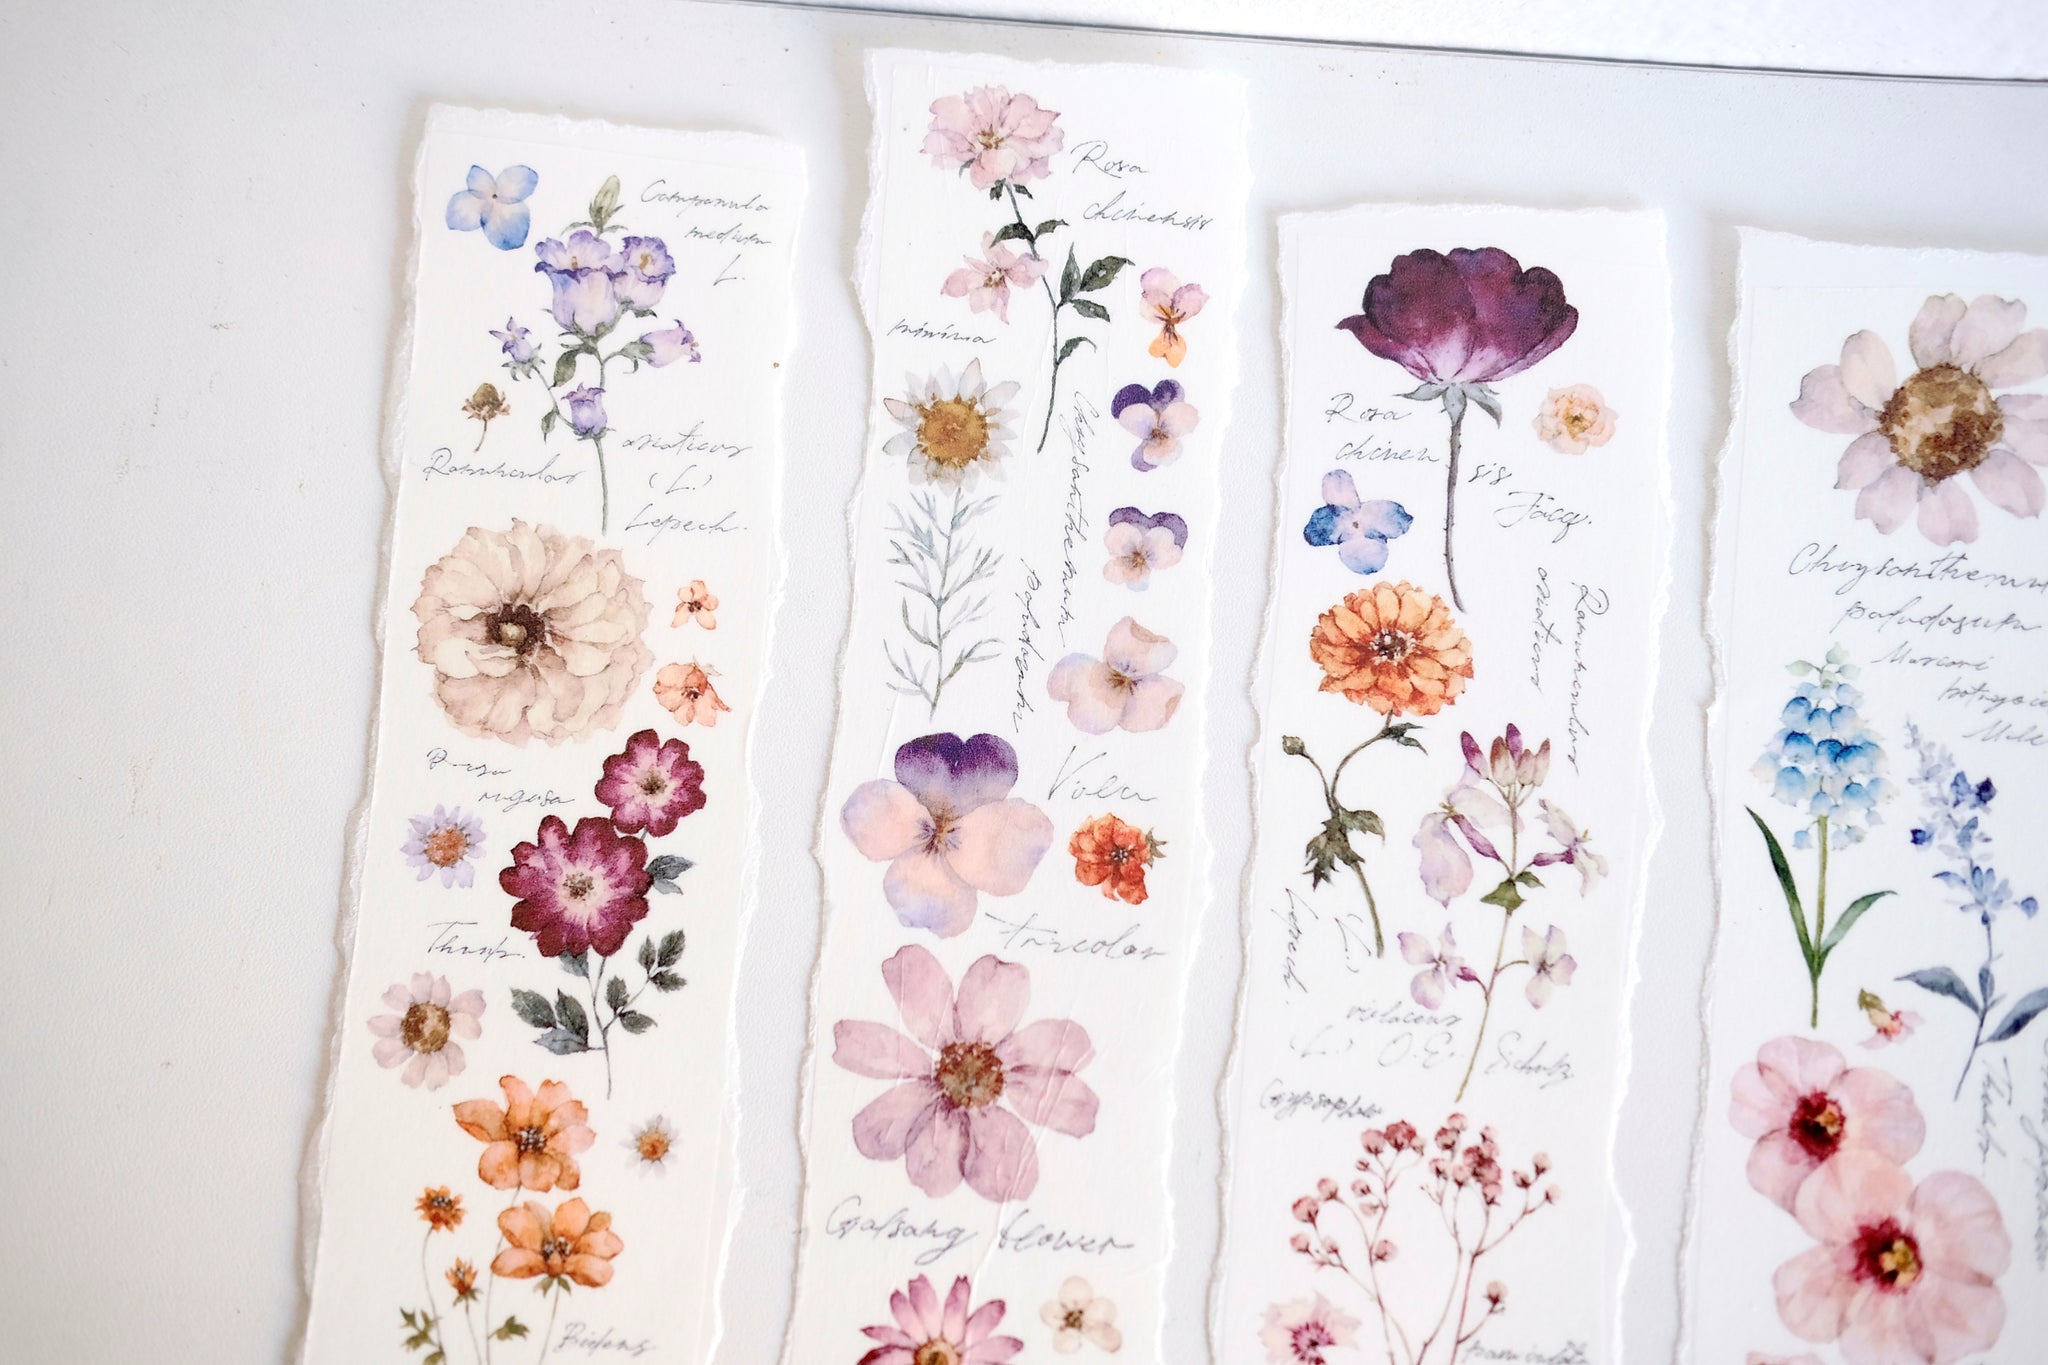 Freckles Tea Tape Sample: Flower Illustrated Handbook